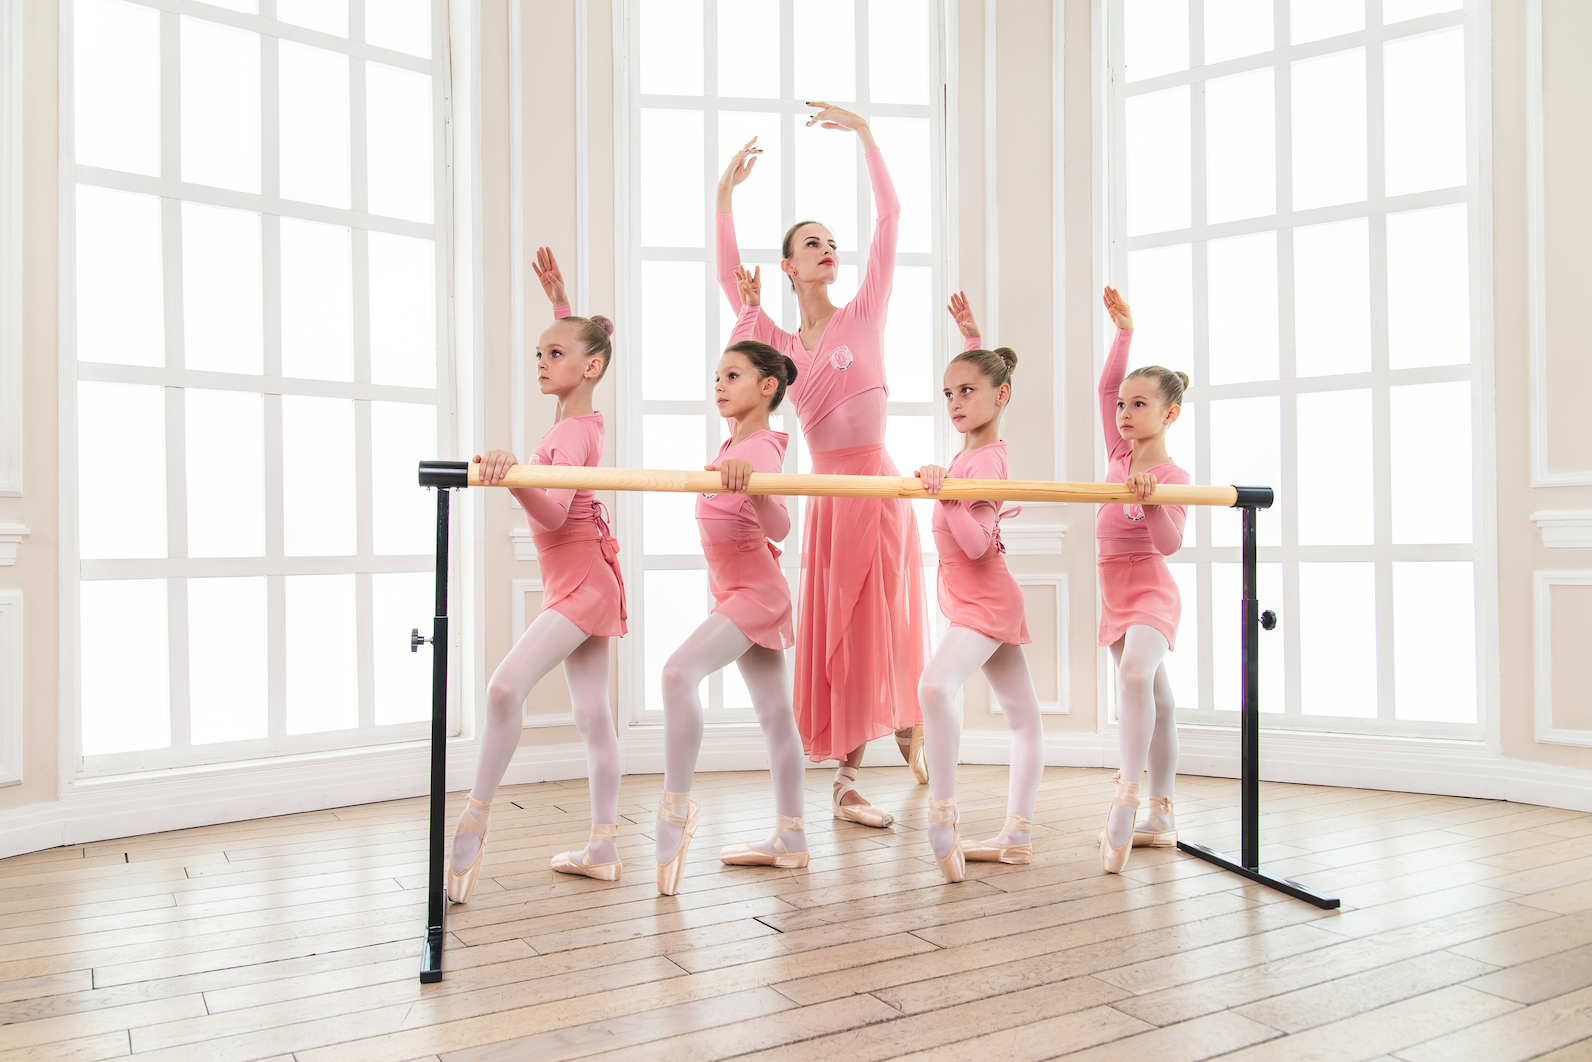 Студия балета Мерлин. Занятия балетом для детей. Балетная студия. Детские Балетные студии. Балетная школа балета